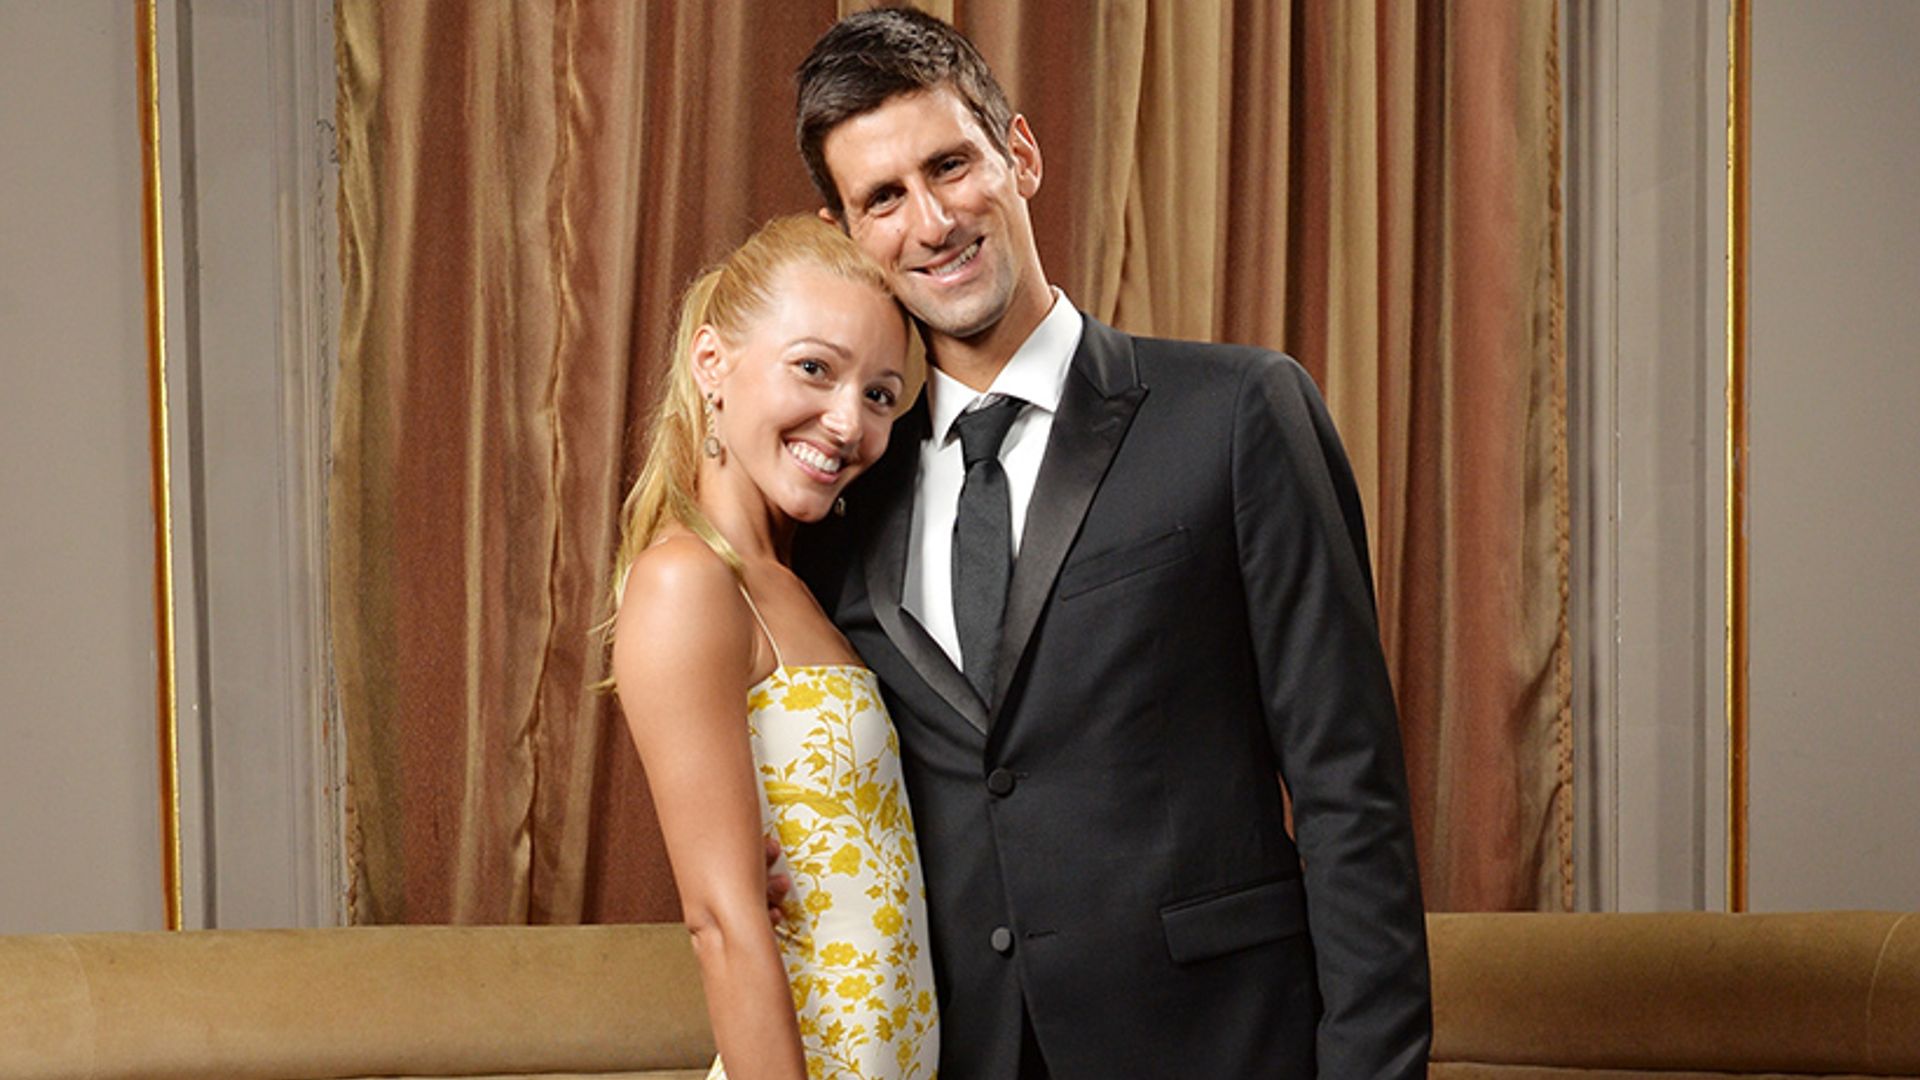 Novak Djokovic confirms birth of daughter with sweet photo